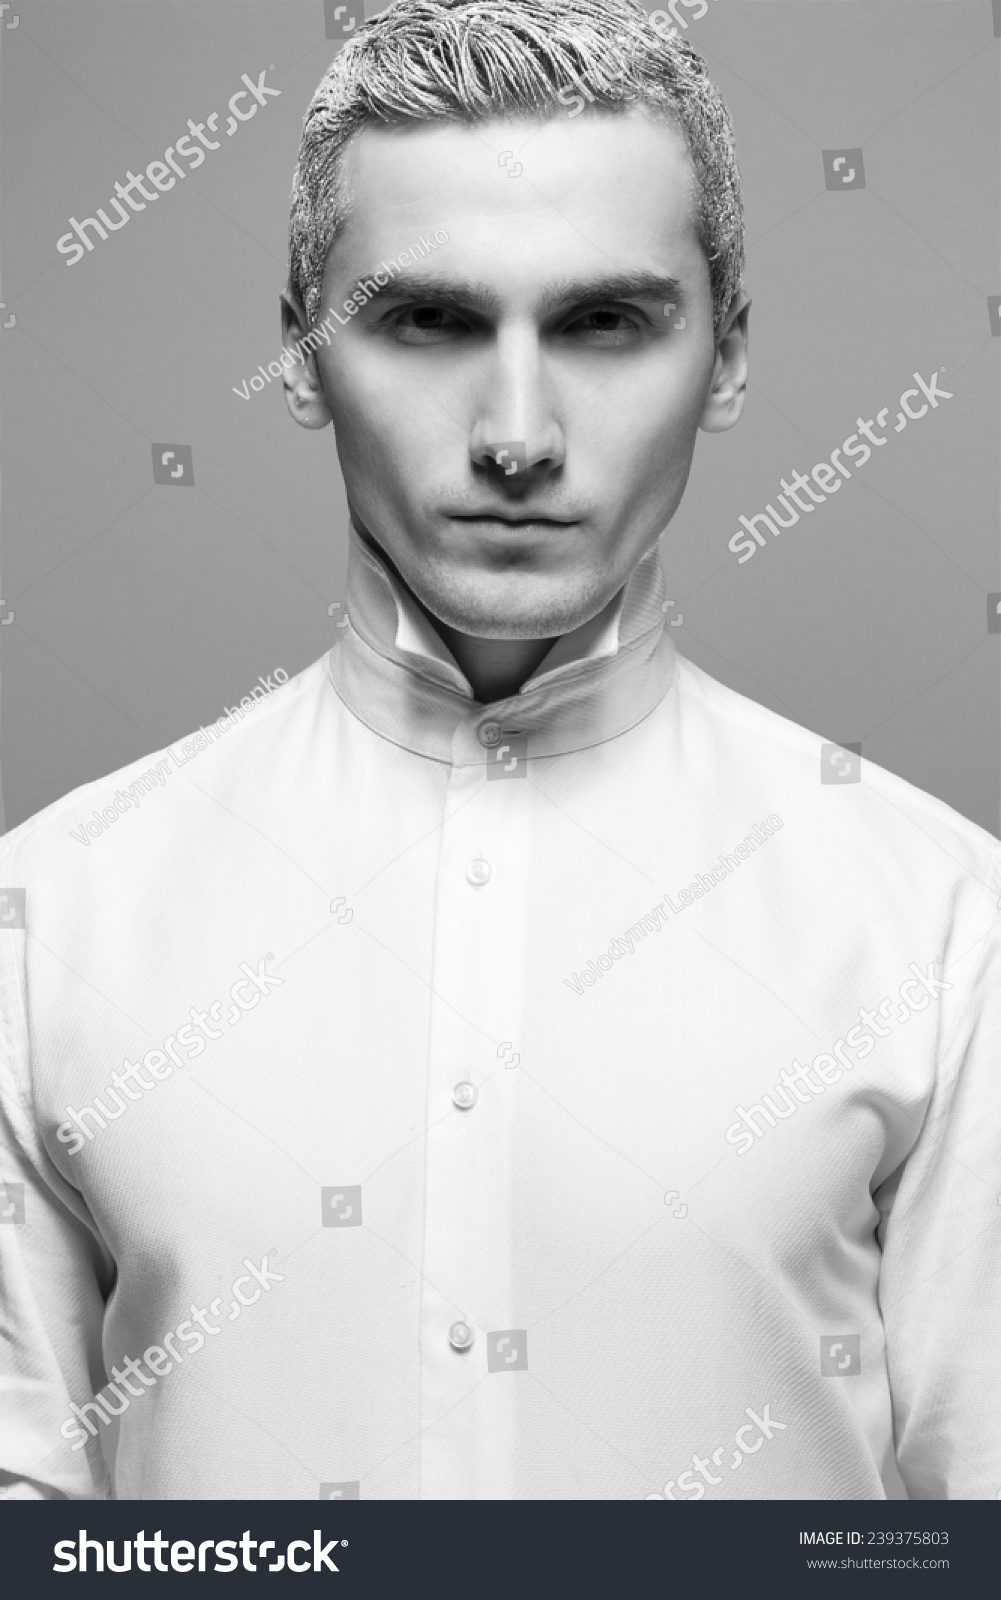 Mr Alien Male Fashion Concept Portrait Stockfoto Jetzt